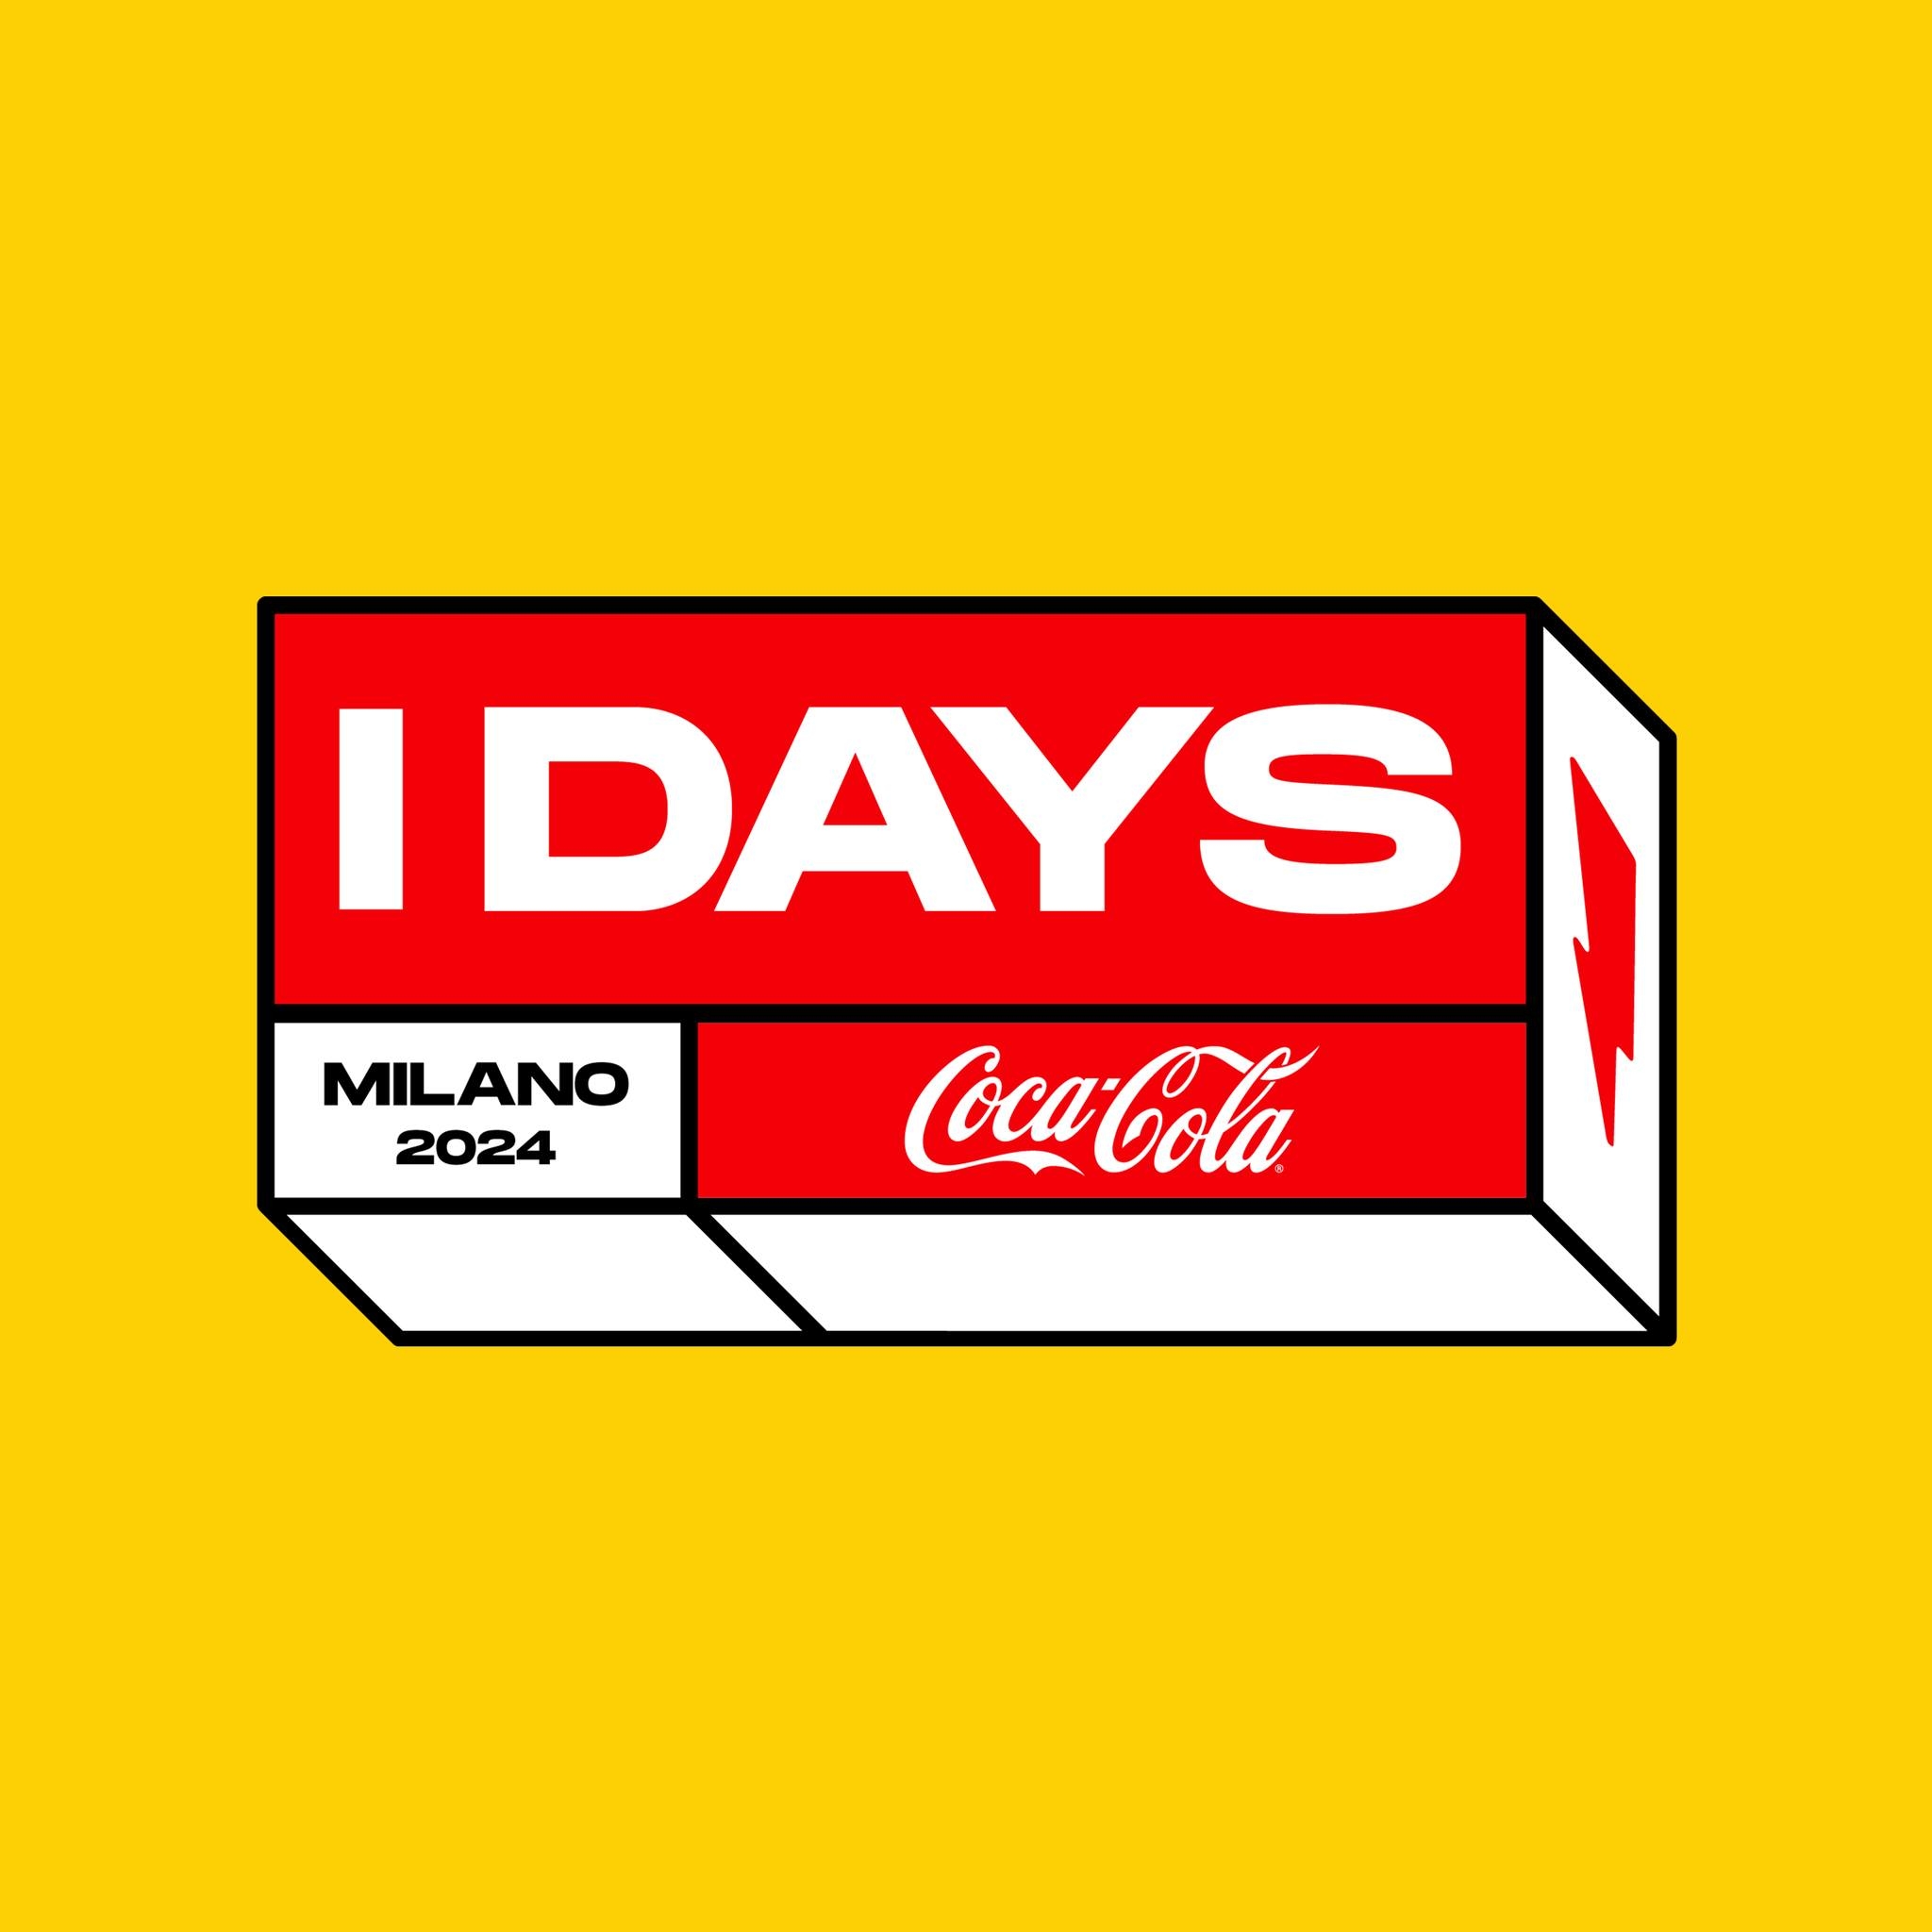 i-days milano coca cola 2024